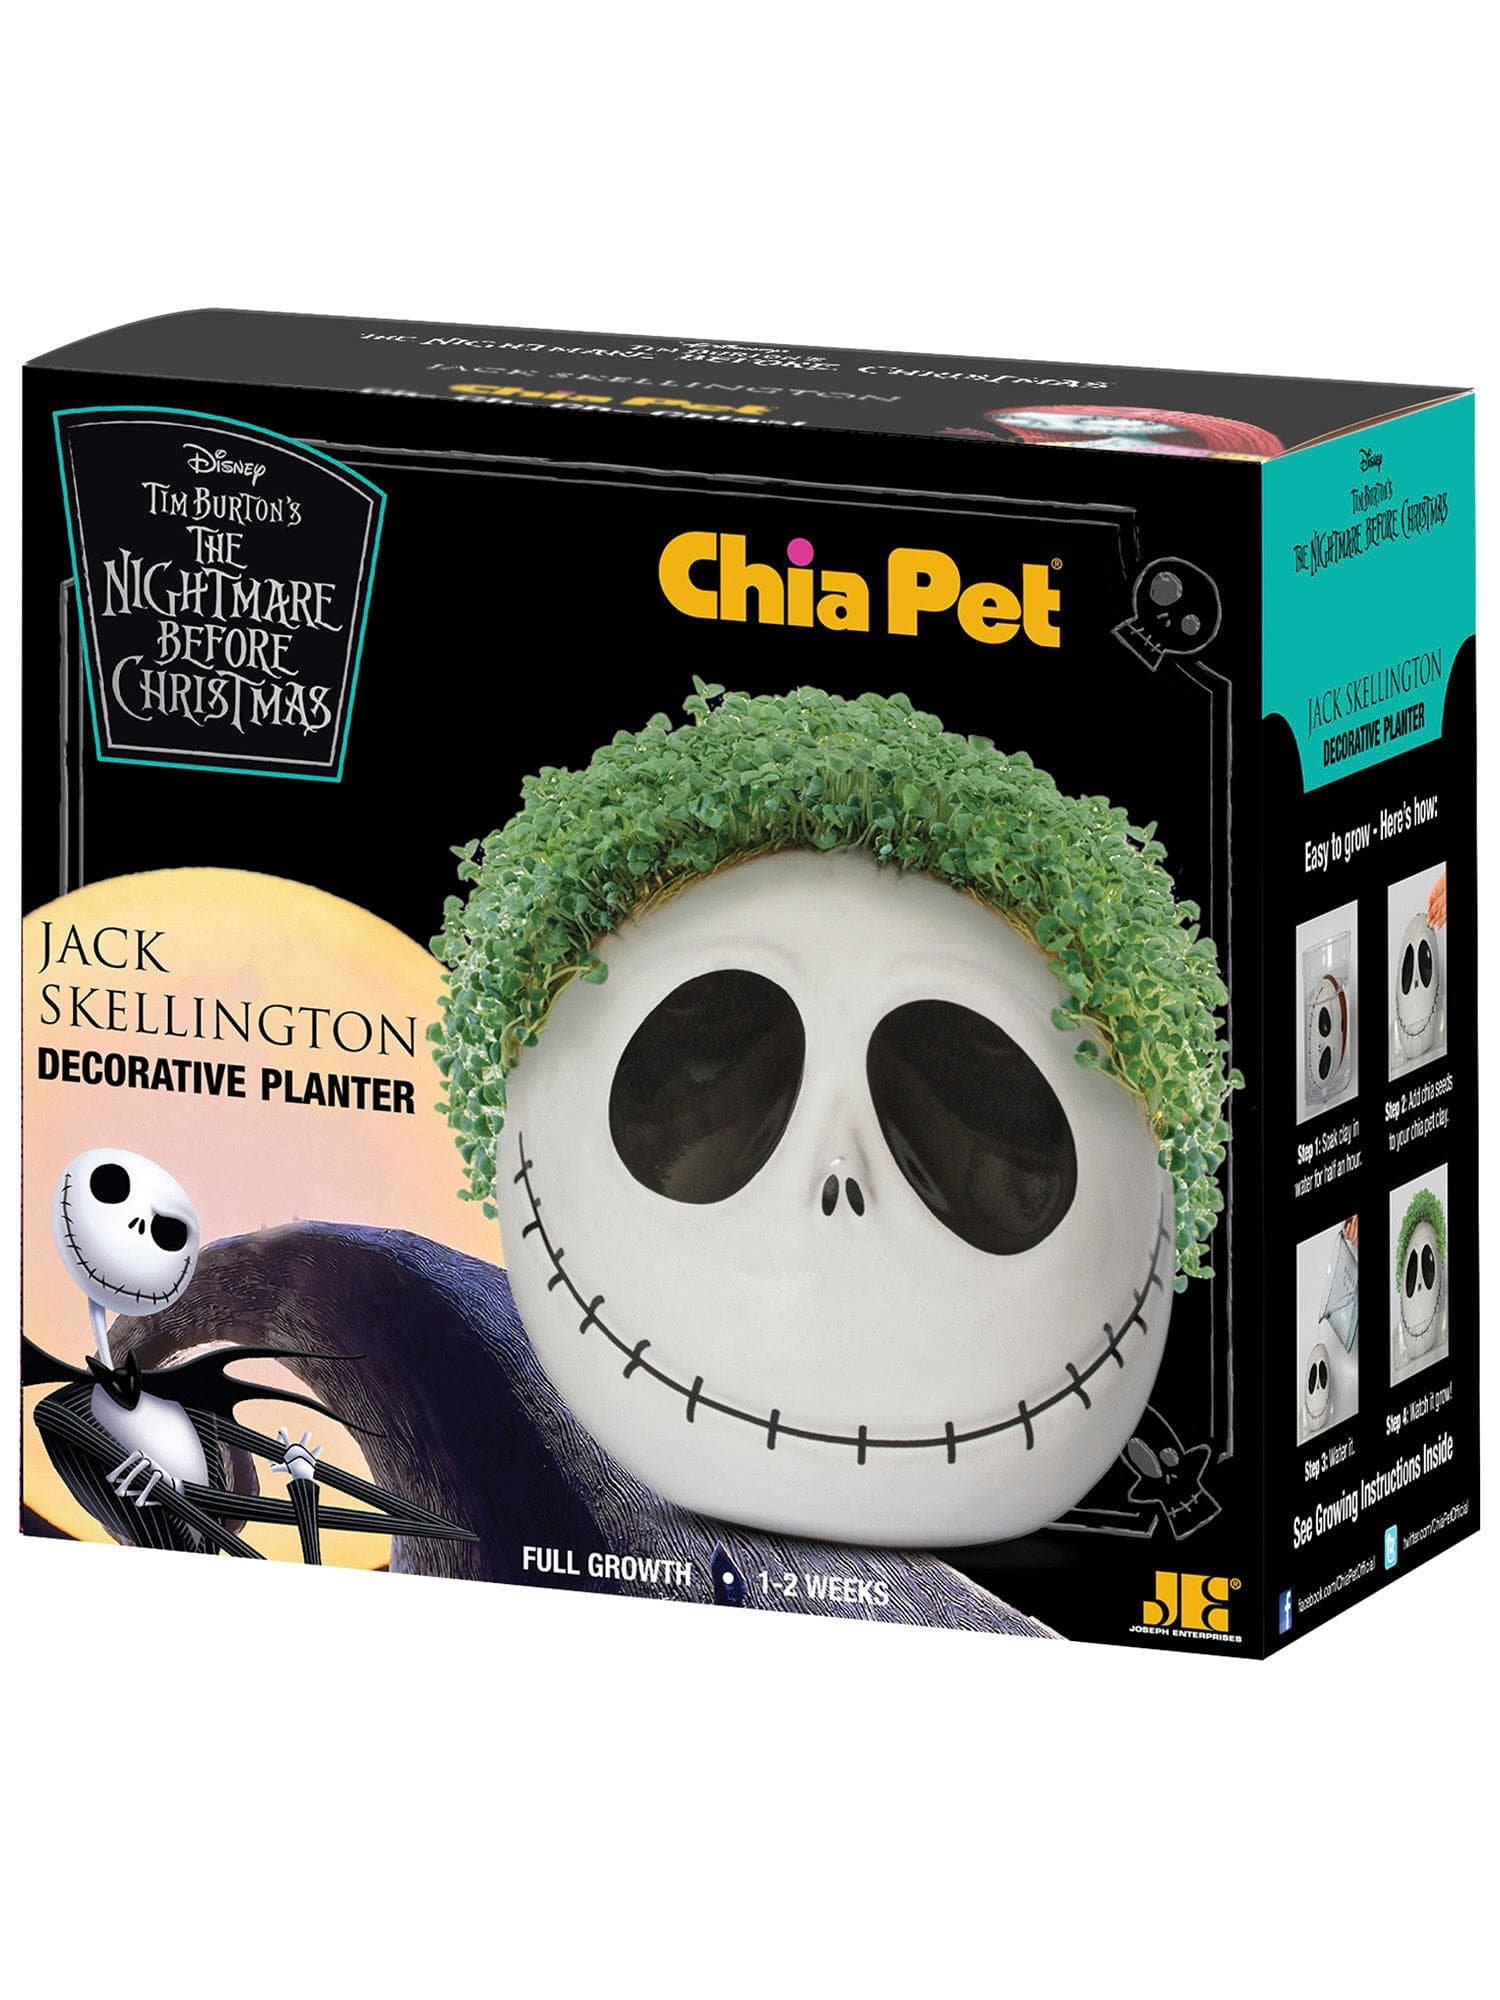 Chia Pet - Jack Skellington (Nightmare before Christmas) - Decorative Planter - costumes.com